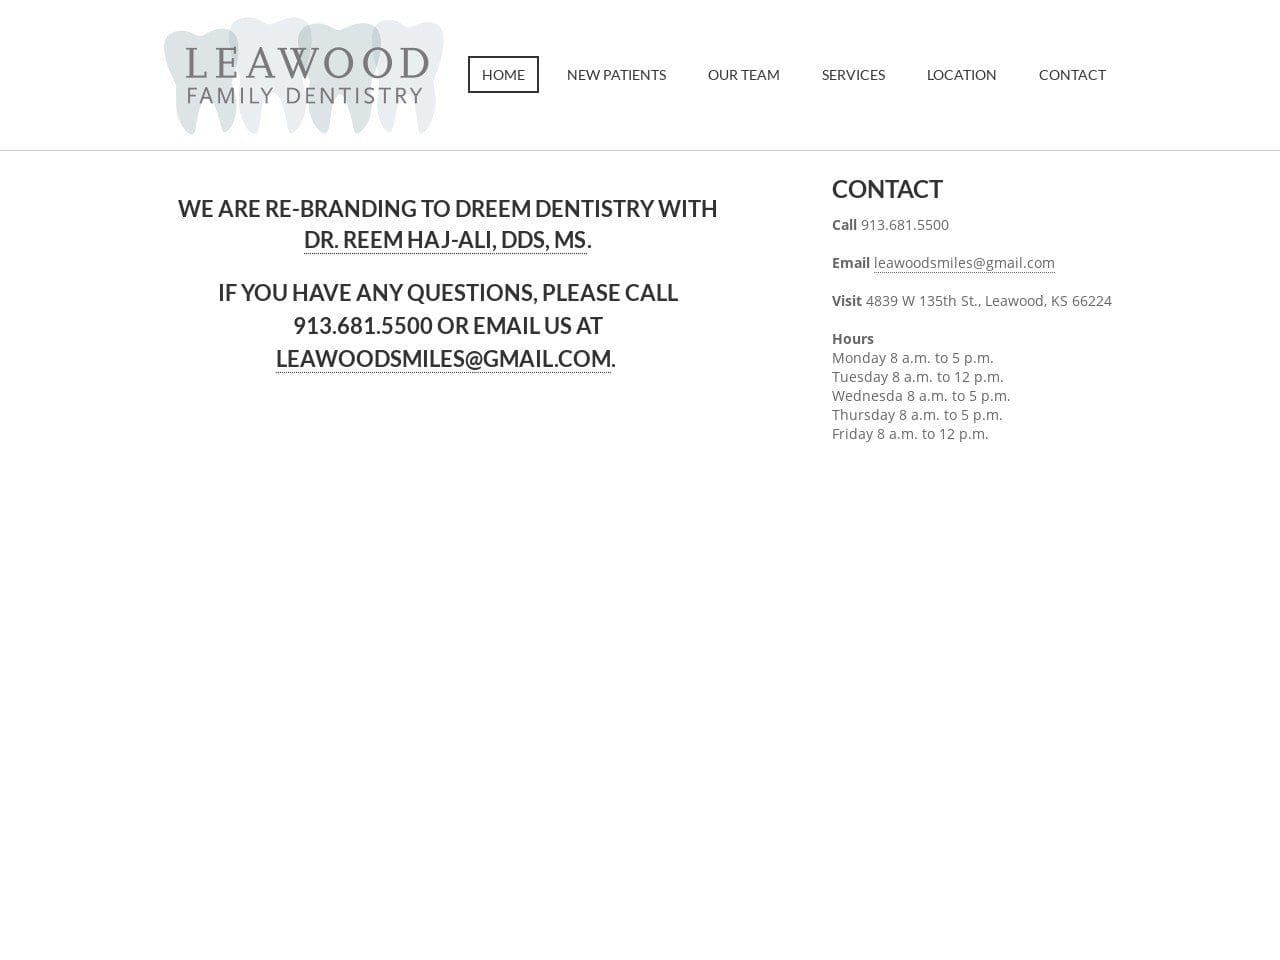 Leawood Family Dentistry Website Screenshot from leawoodsmiles.com